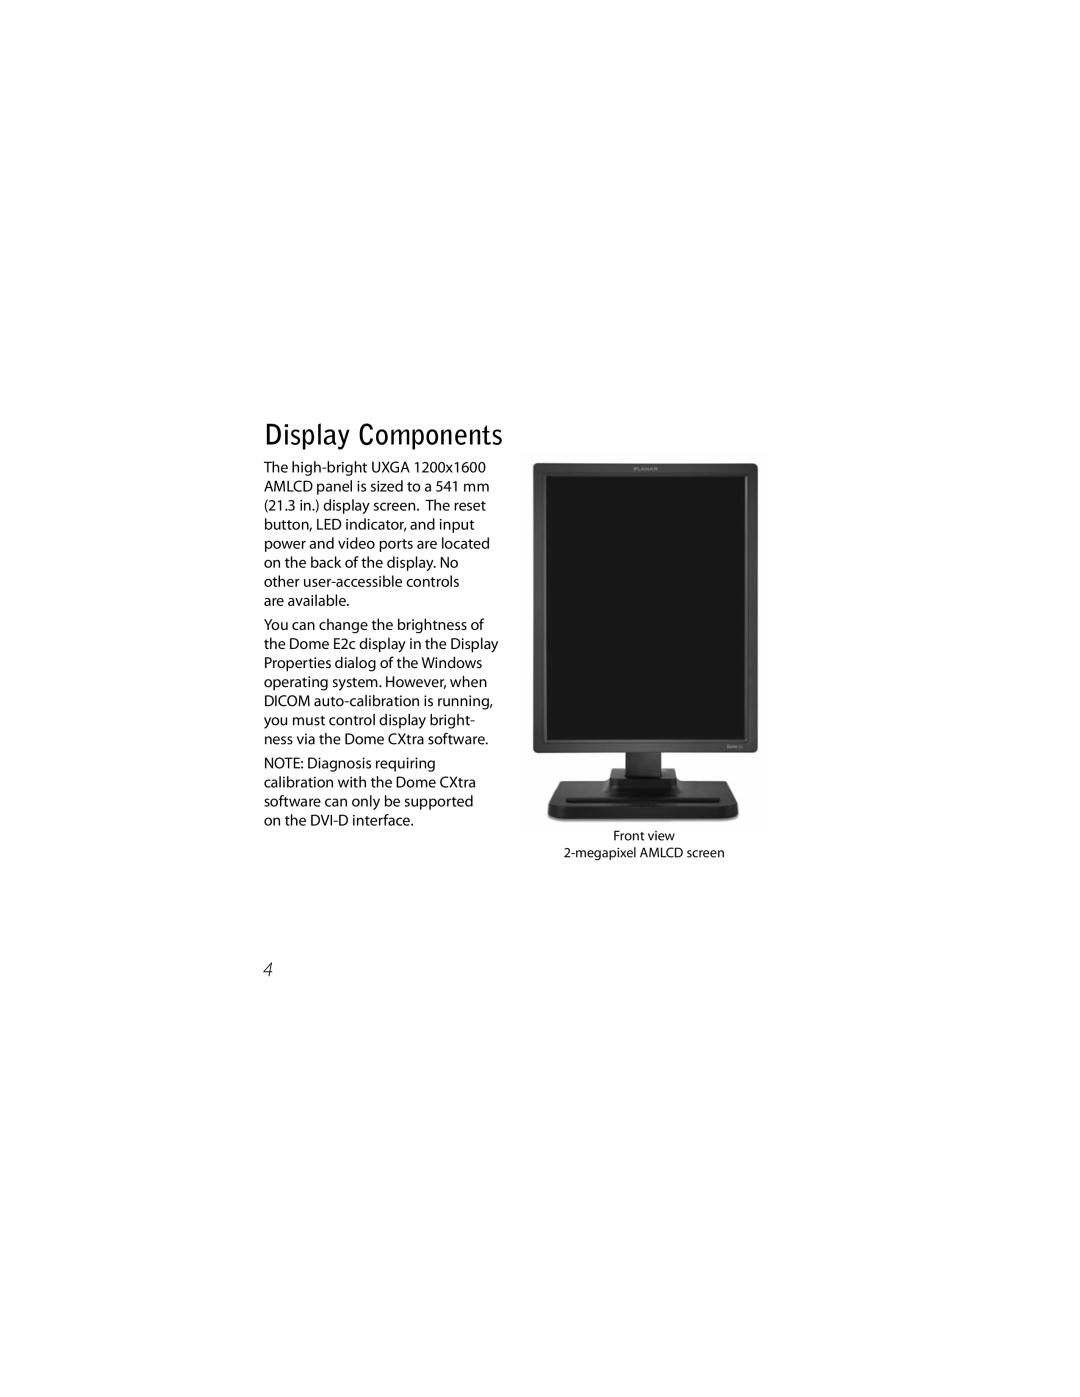 Planar Dome E2c manual Display Components 